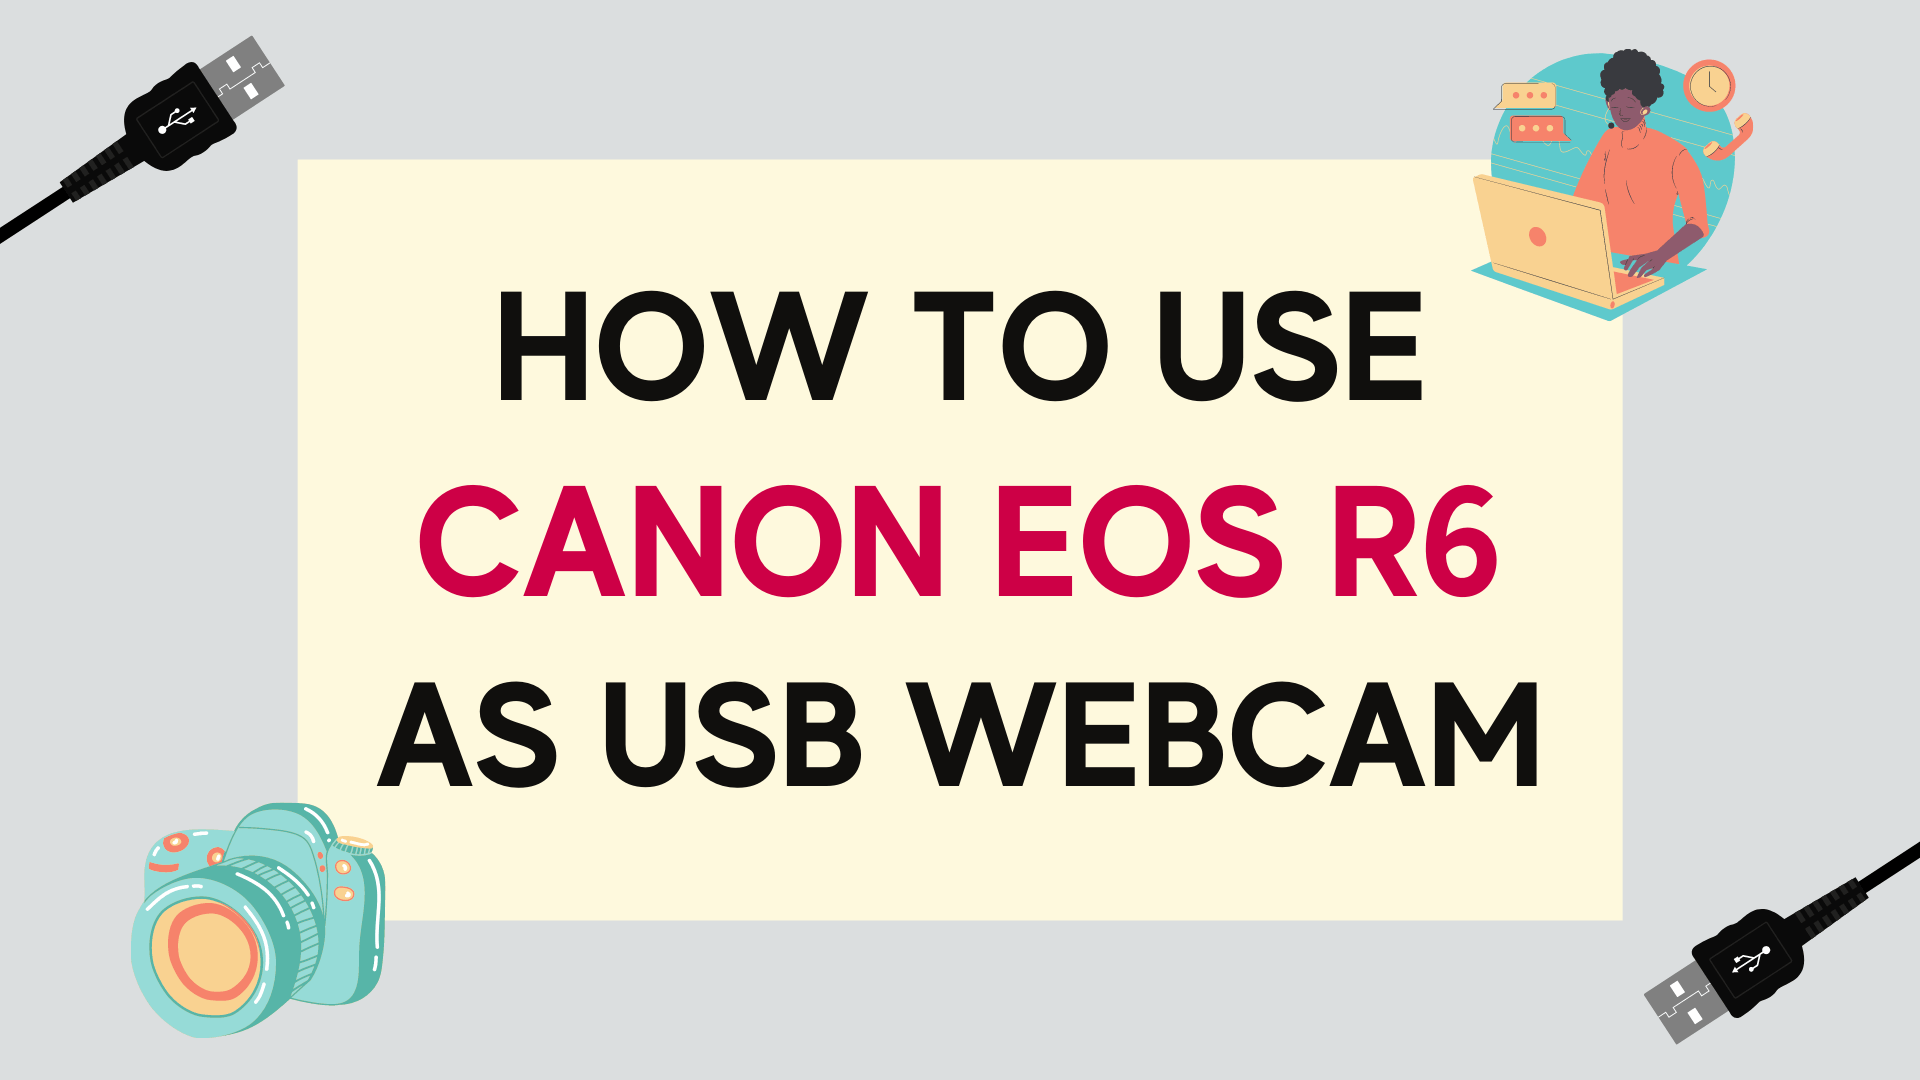 How to use canon eos r6 as a usb webcam